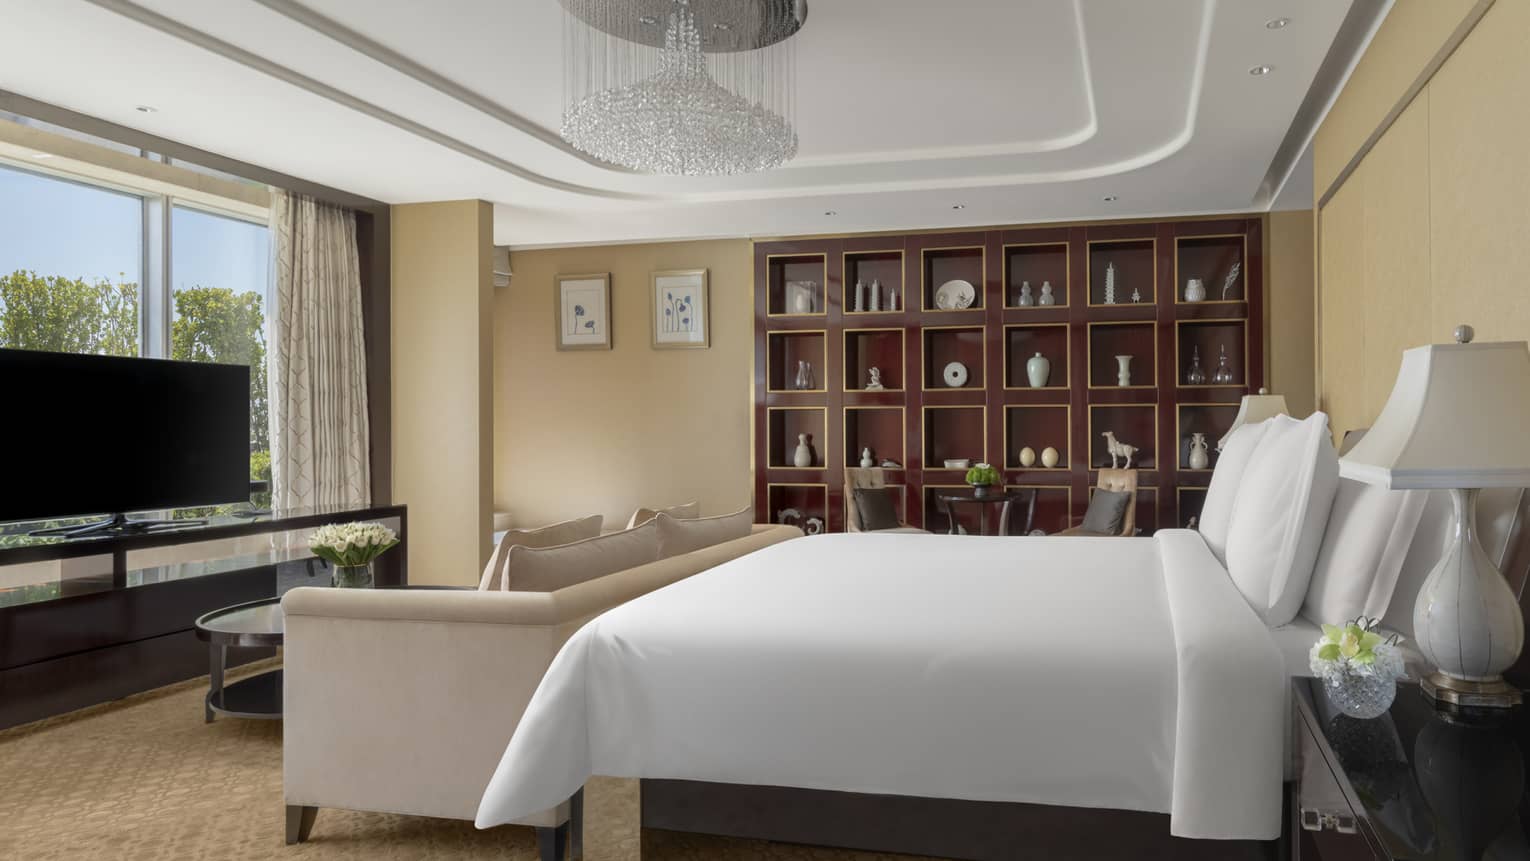 Hotel suite bedroom, with king bed, chandelier, sofa, TV and built-in dark-wood shelves